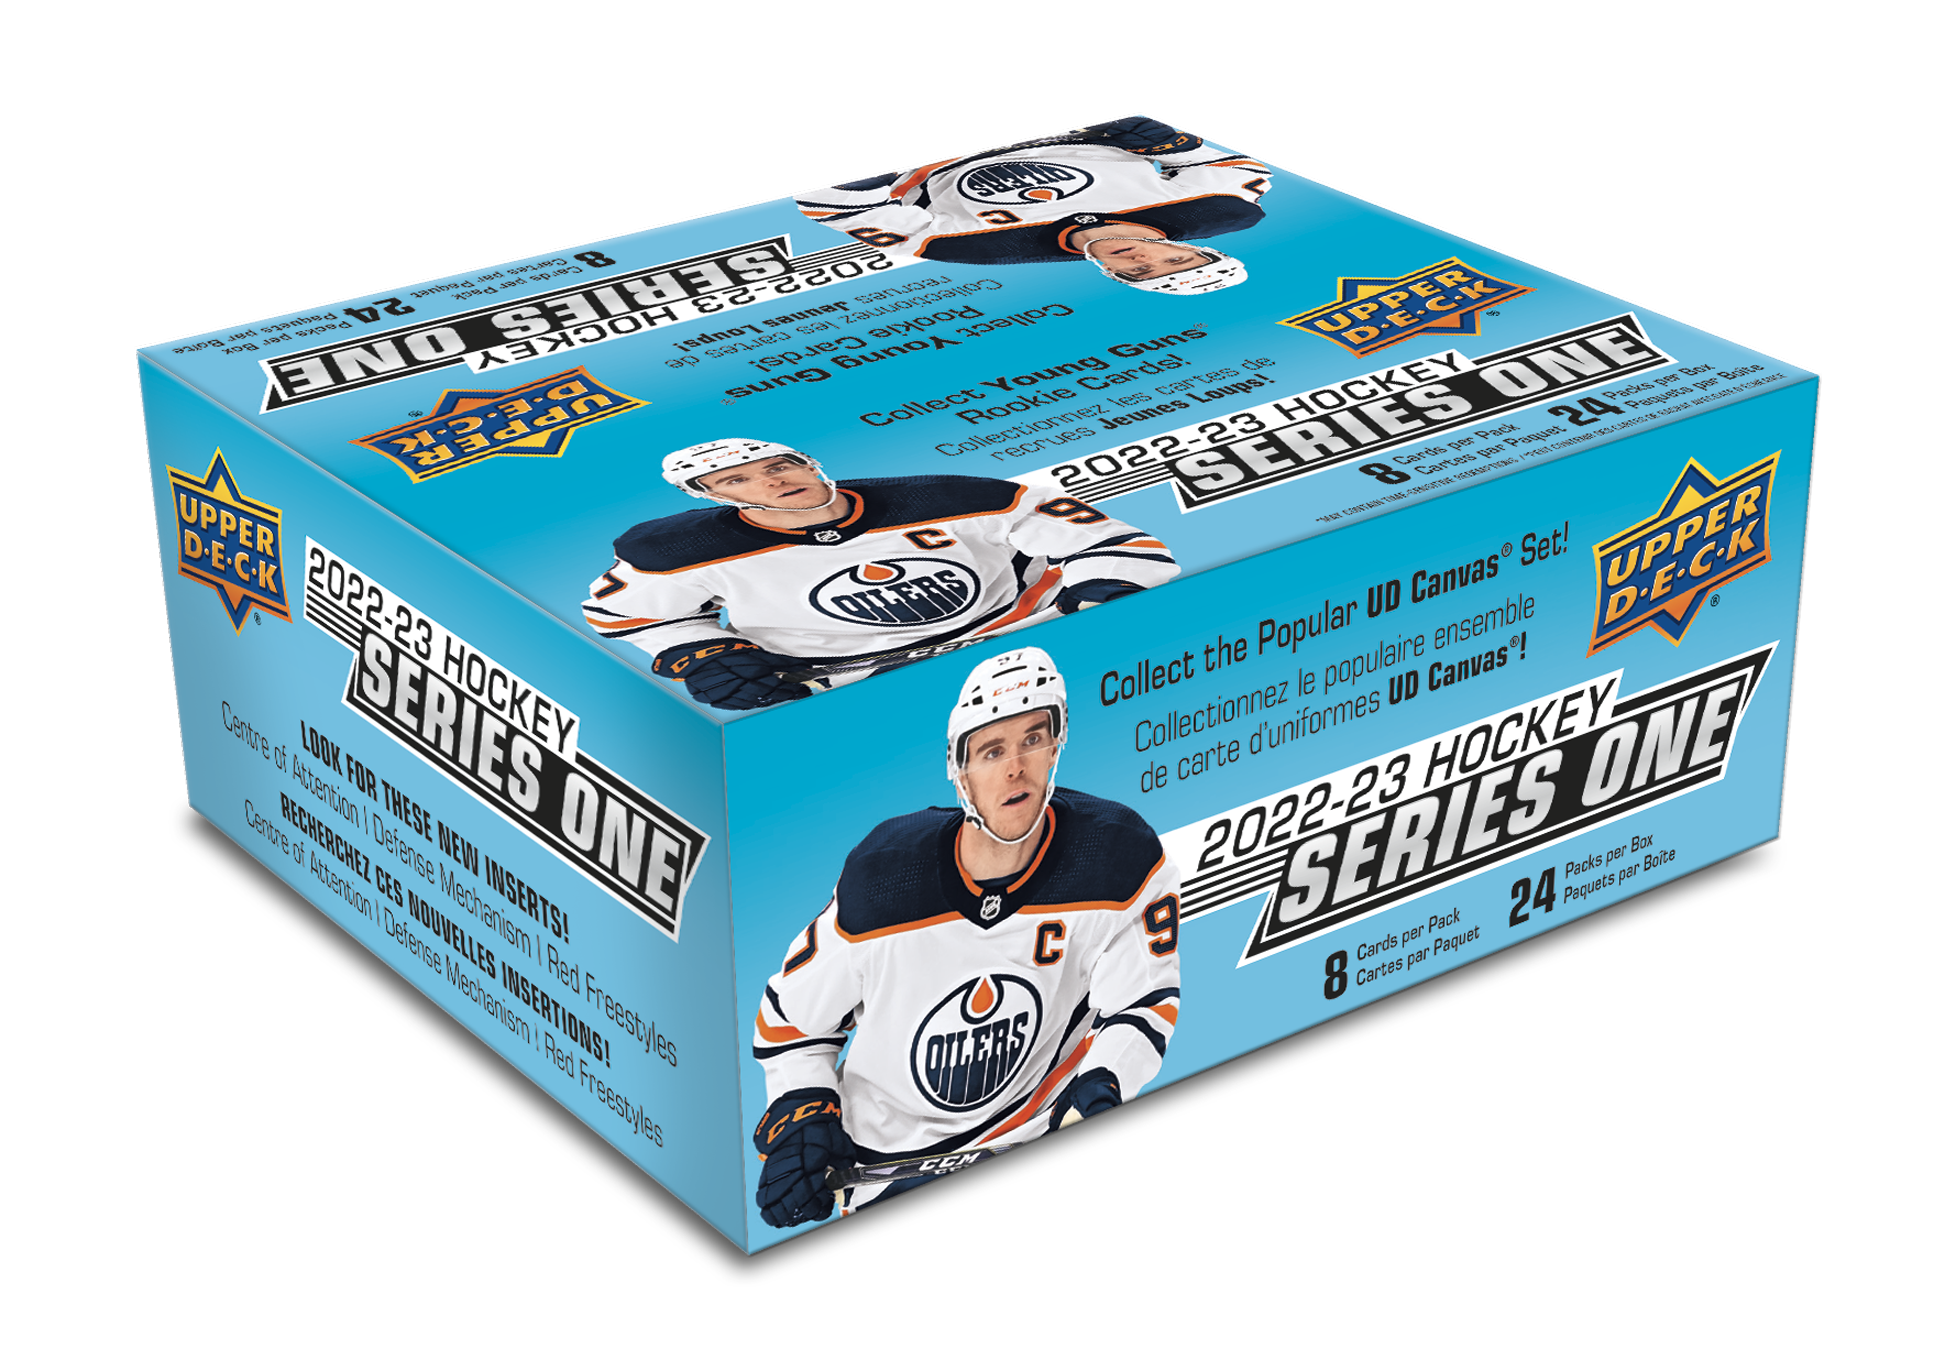 2022-23 Upper Deck Series 1 Hockey Retail Case (Case of 20 Boxes) (Pre-Order) - Miraj Trading